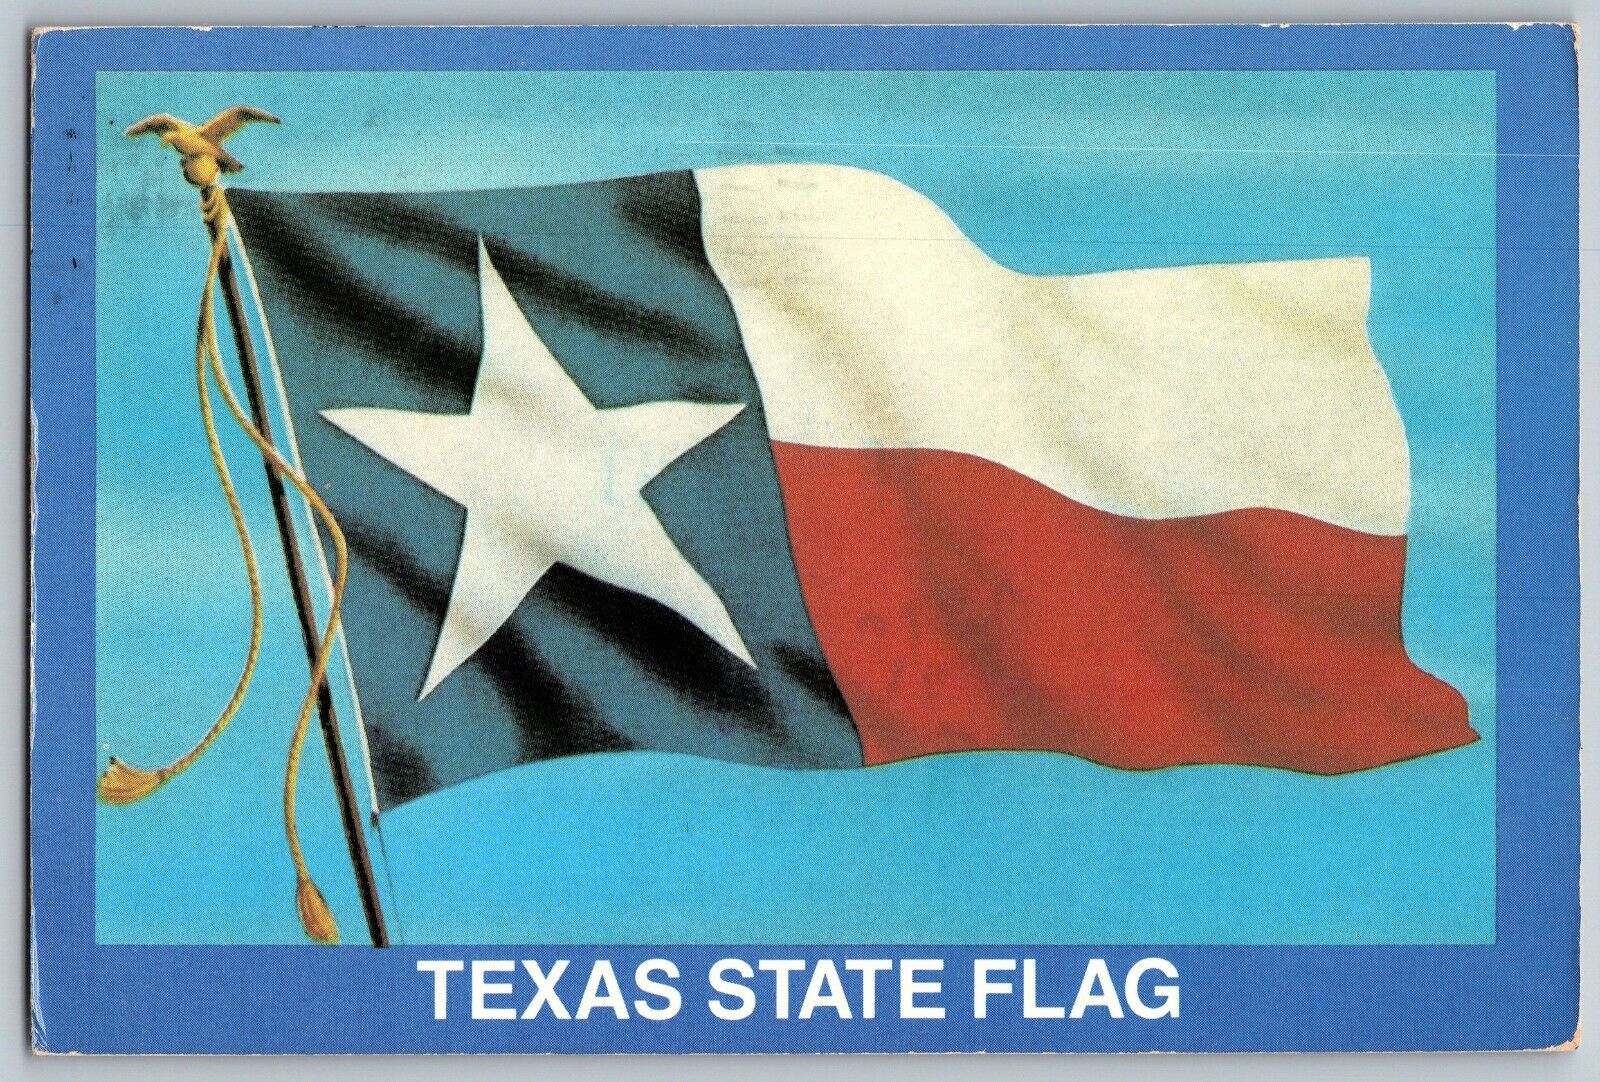 Texas TX - The Texas State Flag - Vintage Postcard 4x6 - Posted